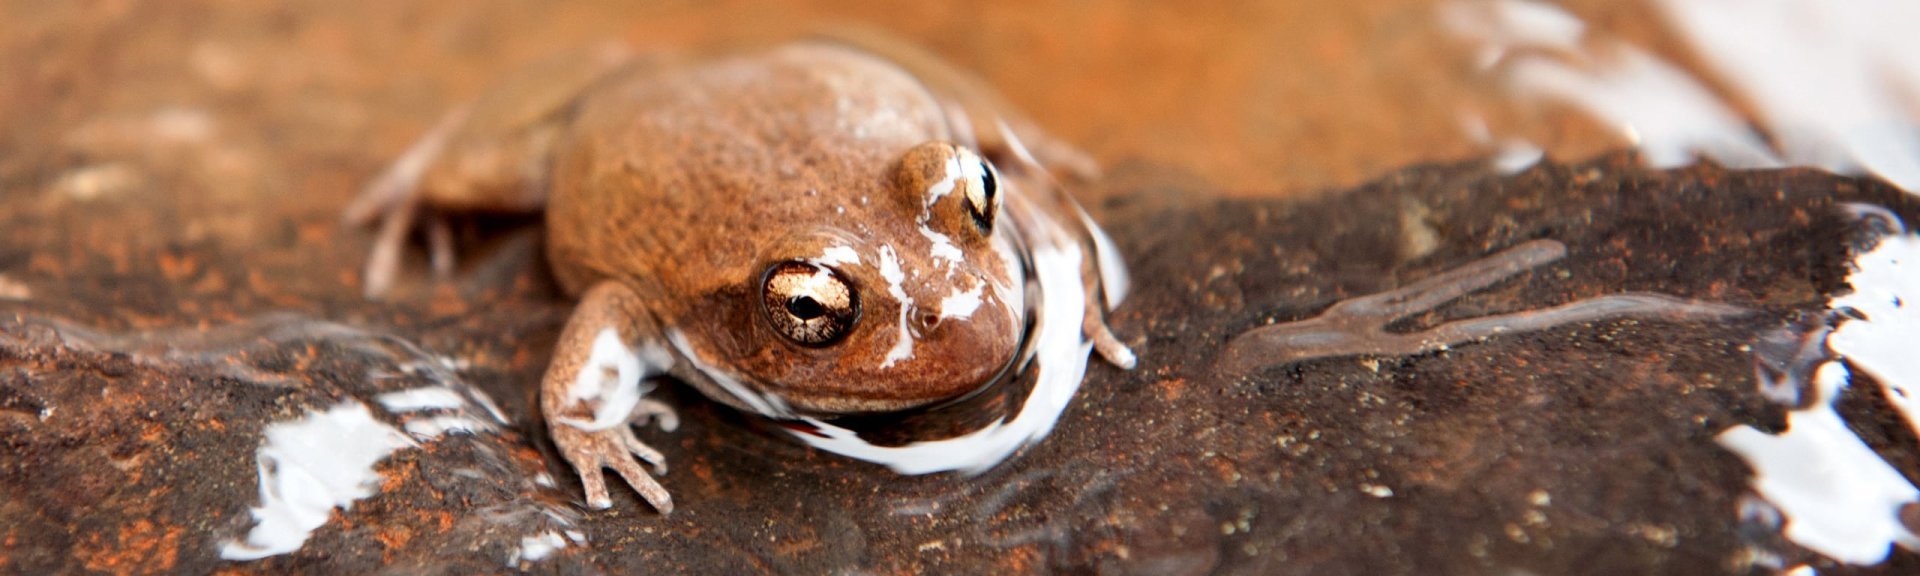 Water-holding frog. Photo: Tourism Australia